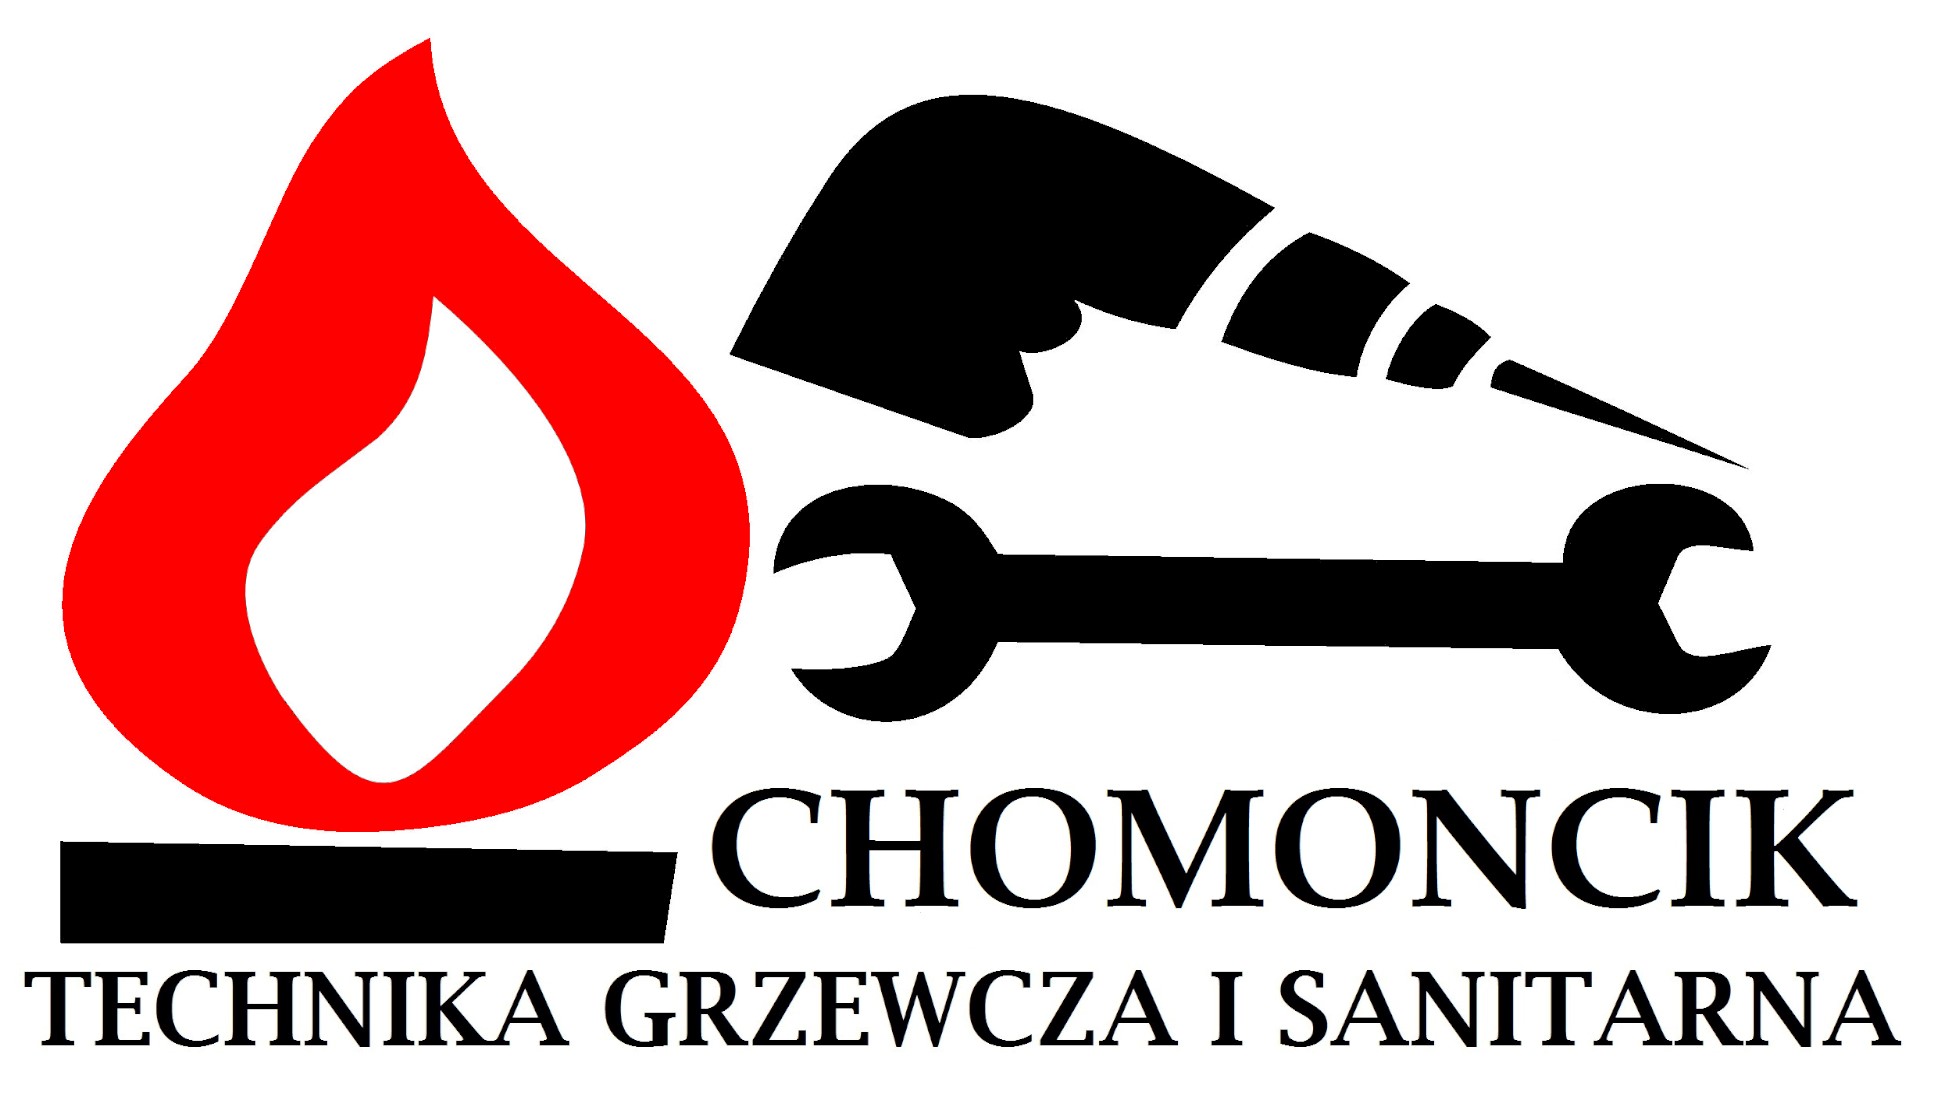 partner: Technika Grzewcza i Sanitarna CHOMONCIK